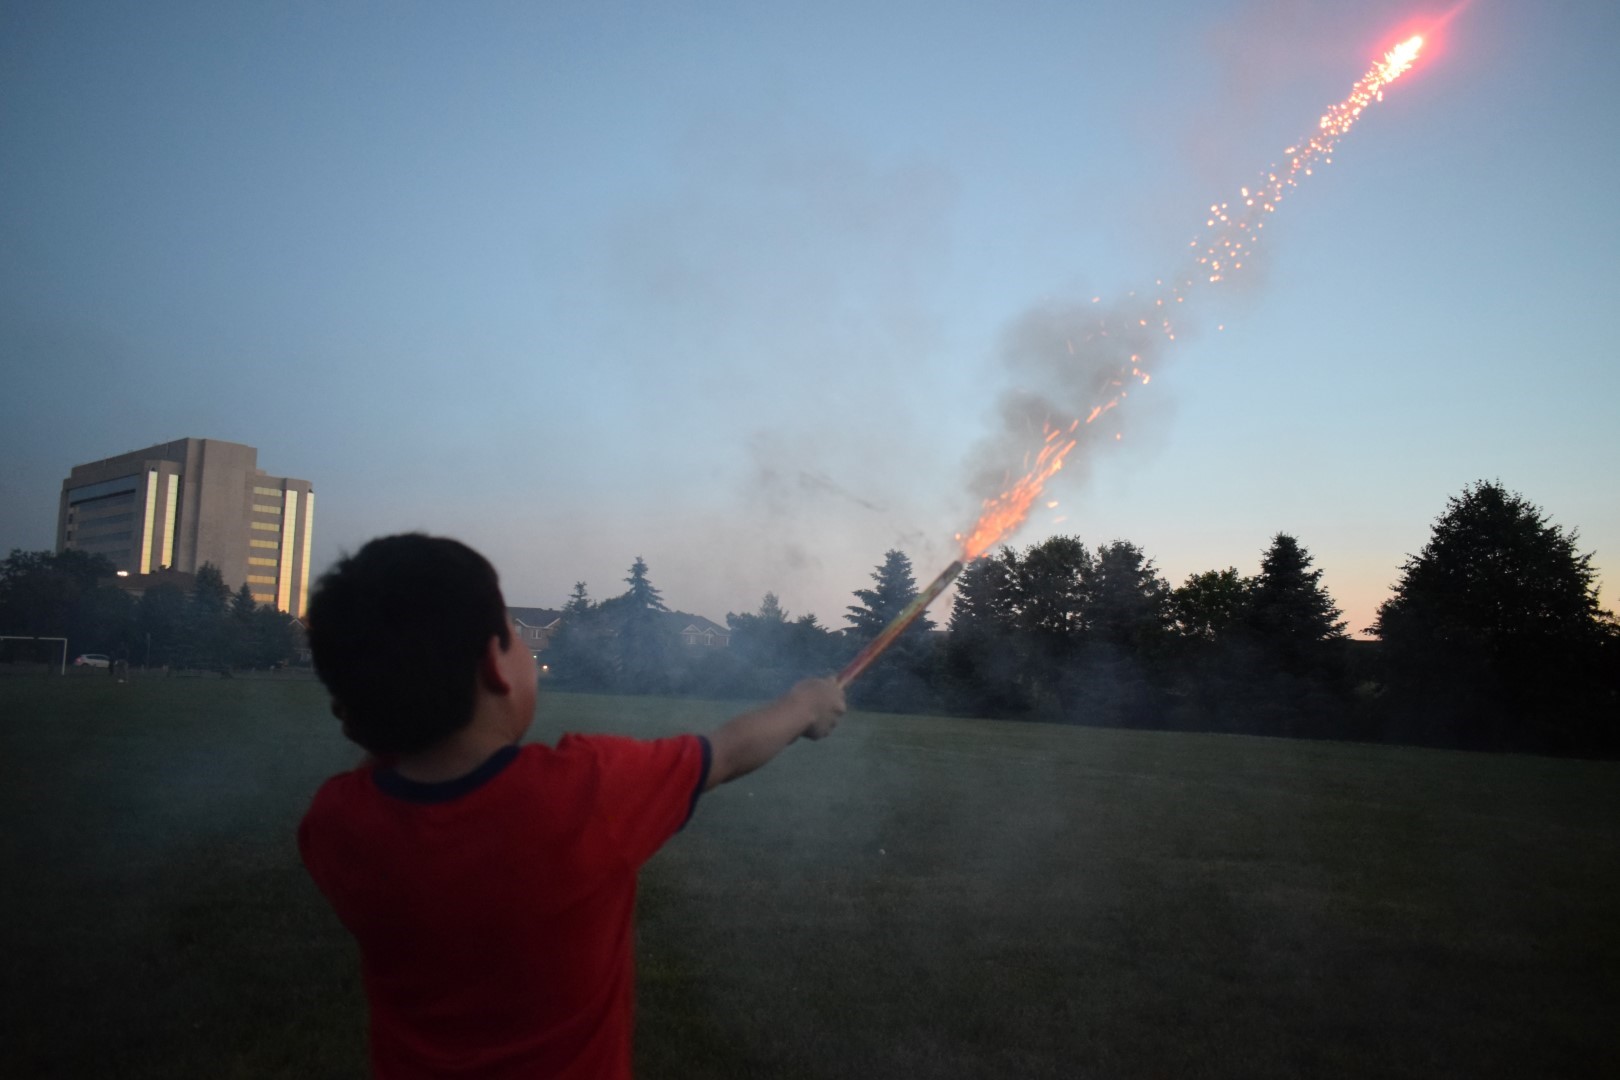 Canada Day fireworks, June 30 2019, Ottawa